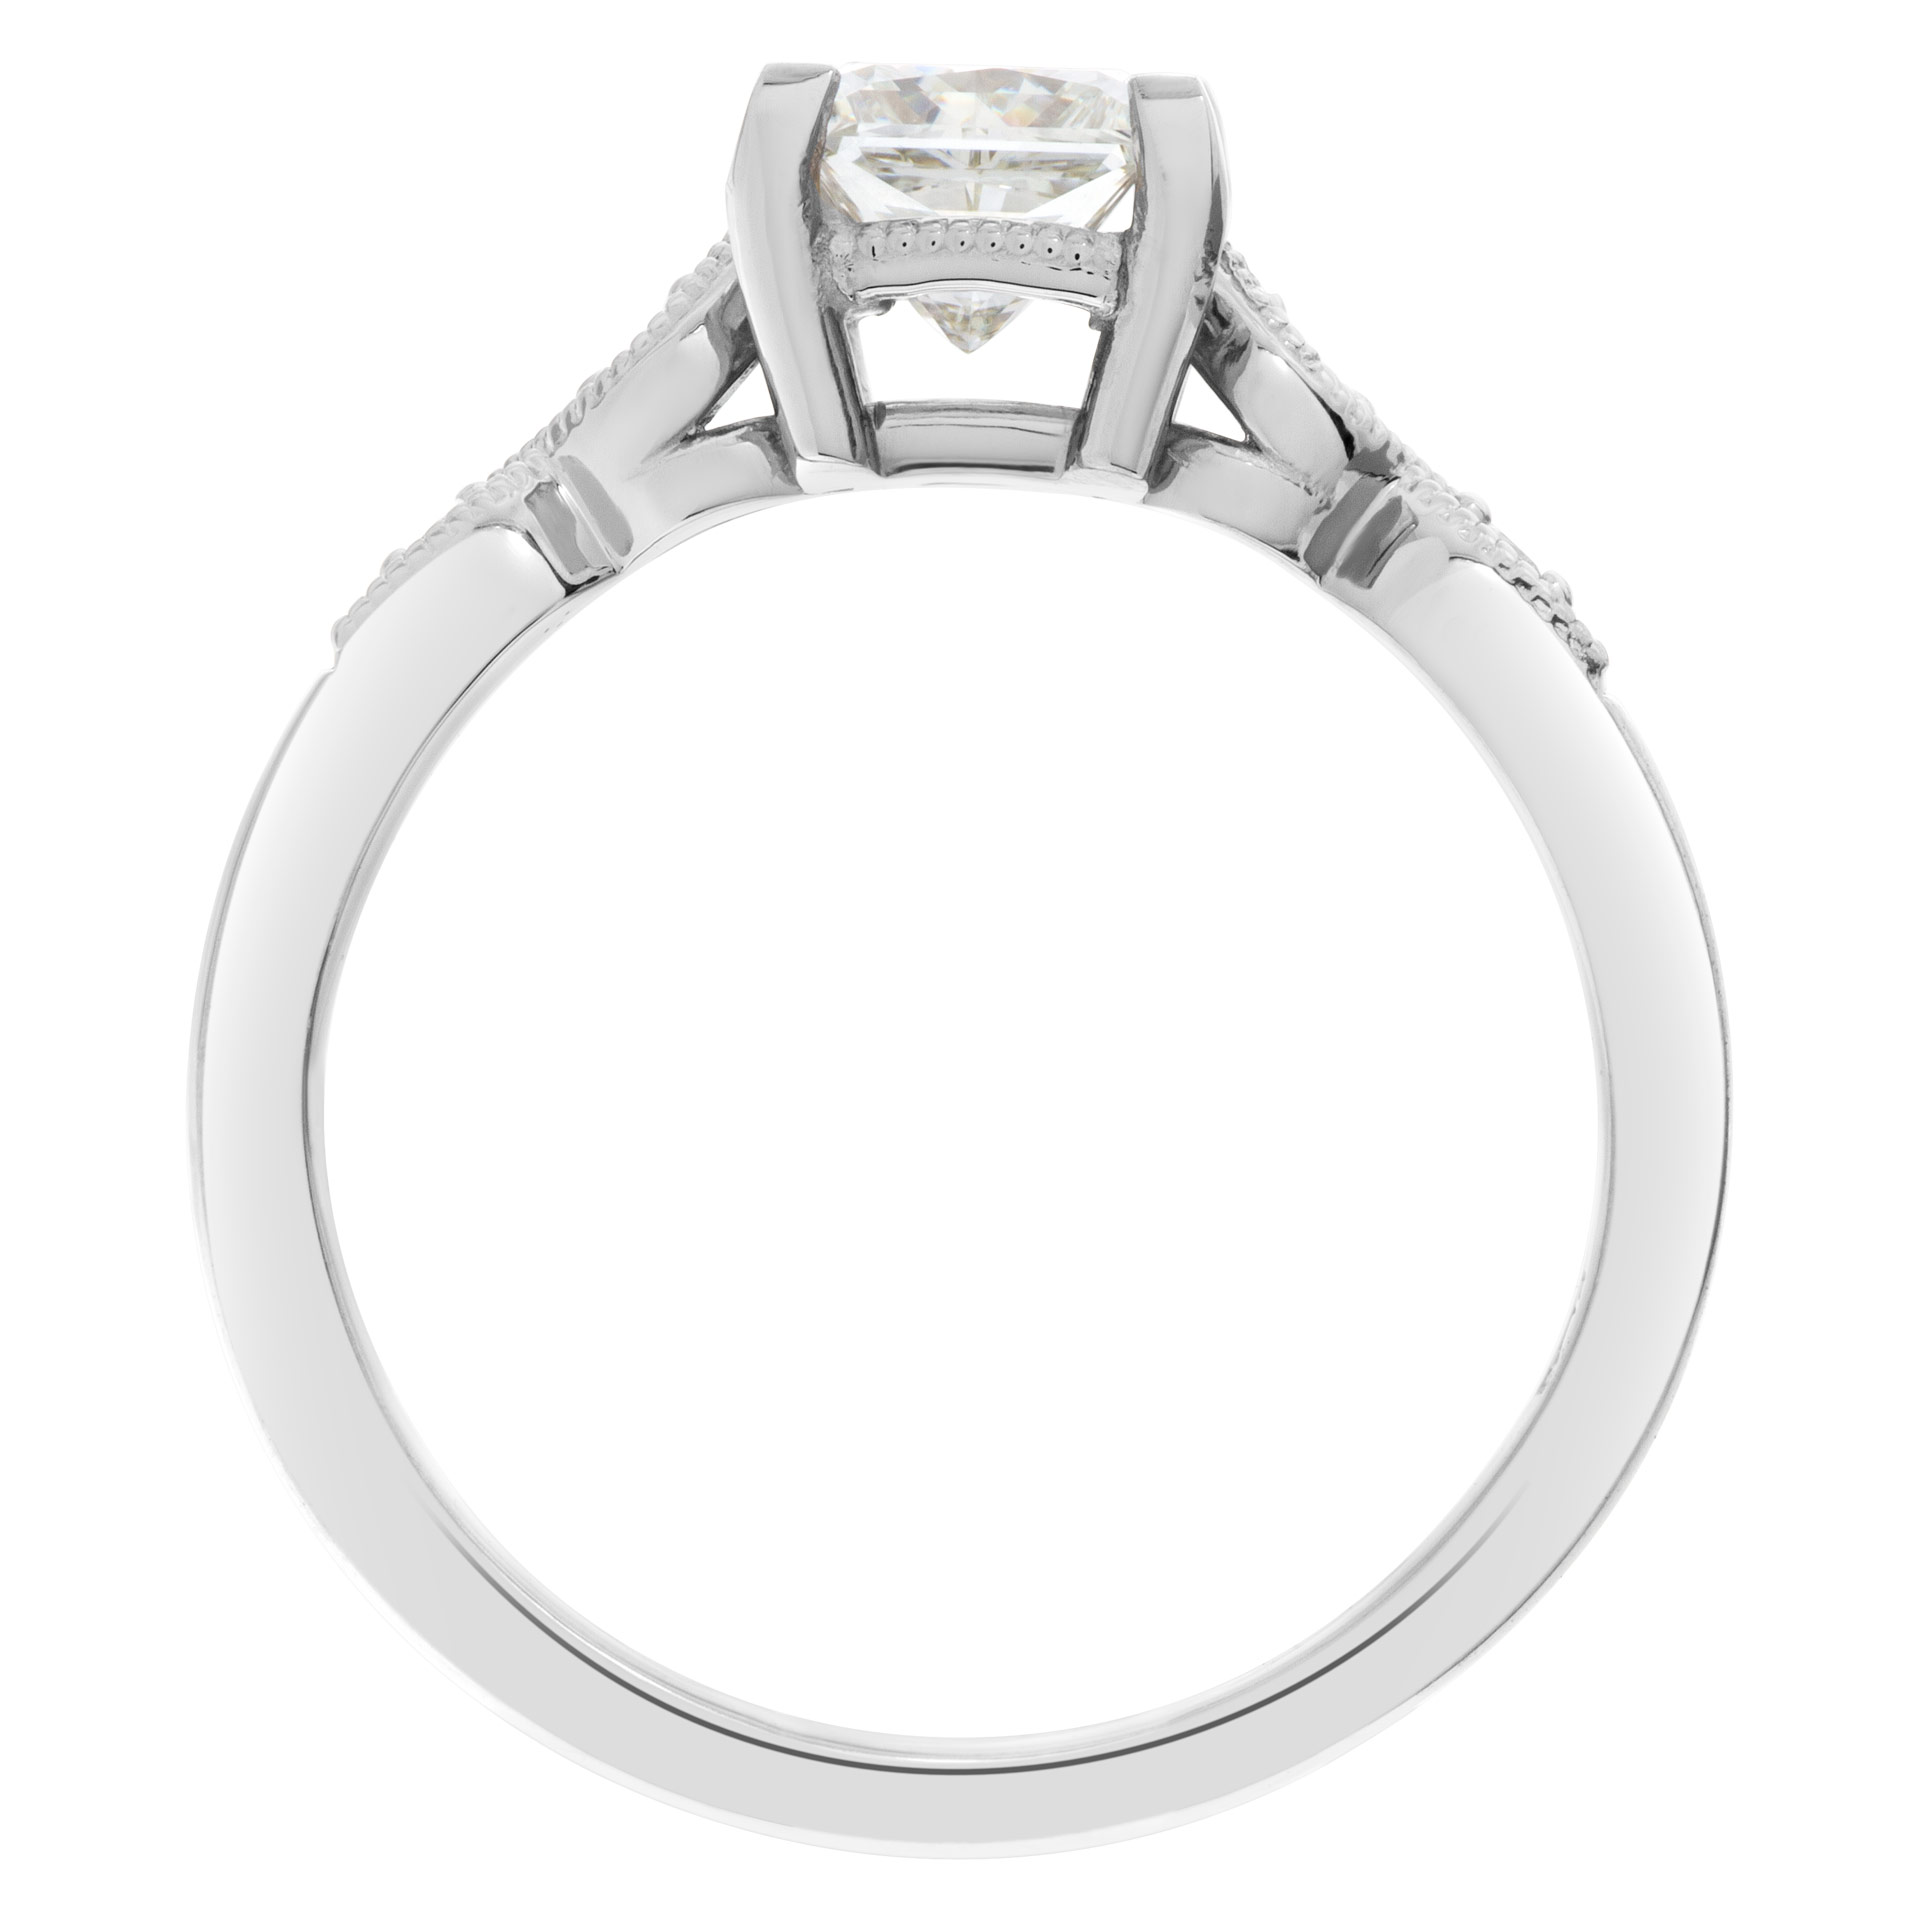 GIA certified rectangular modified brilliant cut diamond 1.03 carat (L color, VVS2 clarity) ring image 5